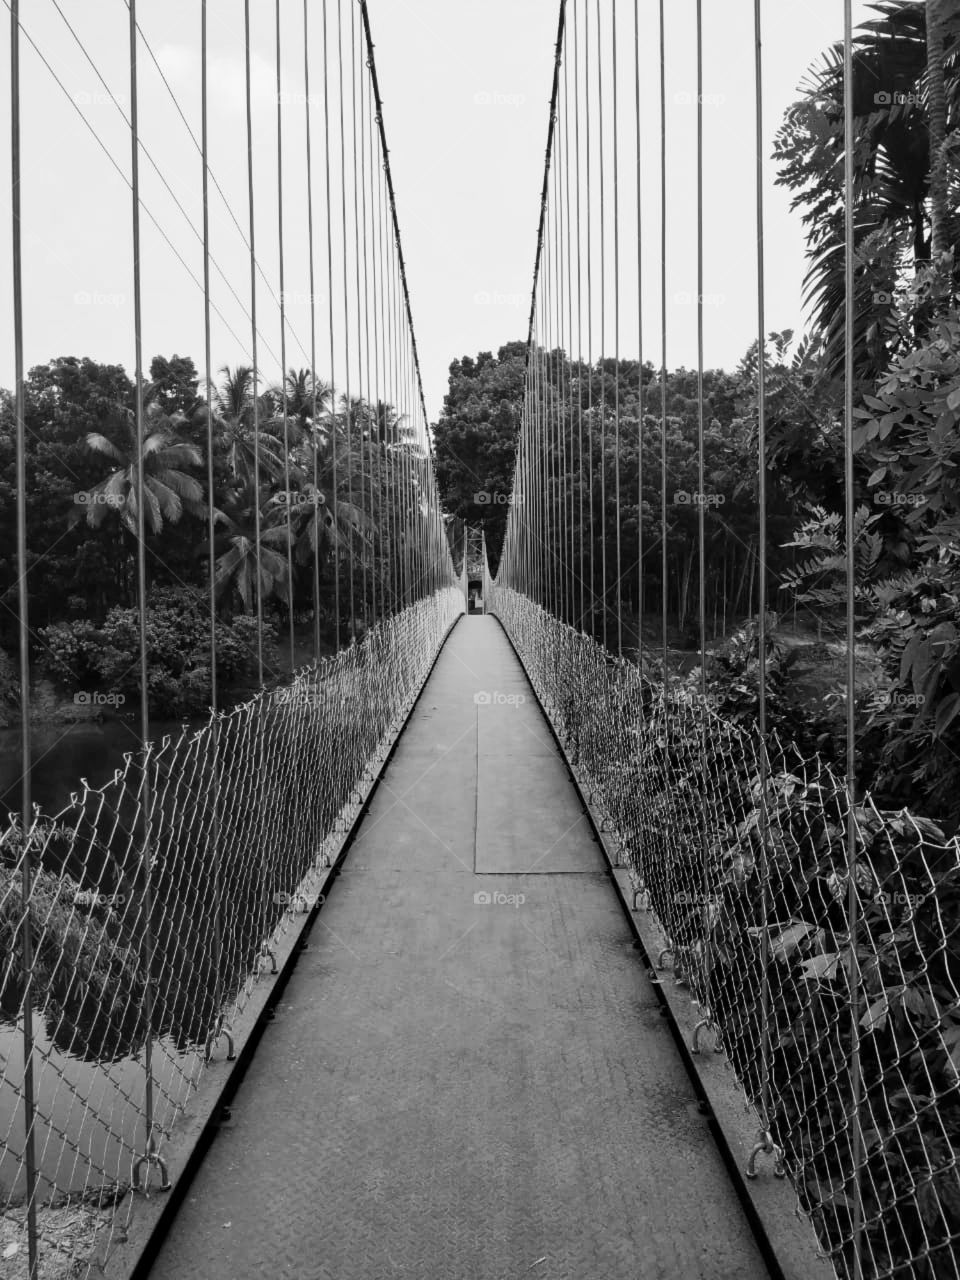 The bridge where perspective meets beauty